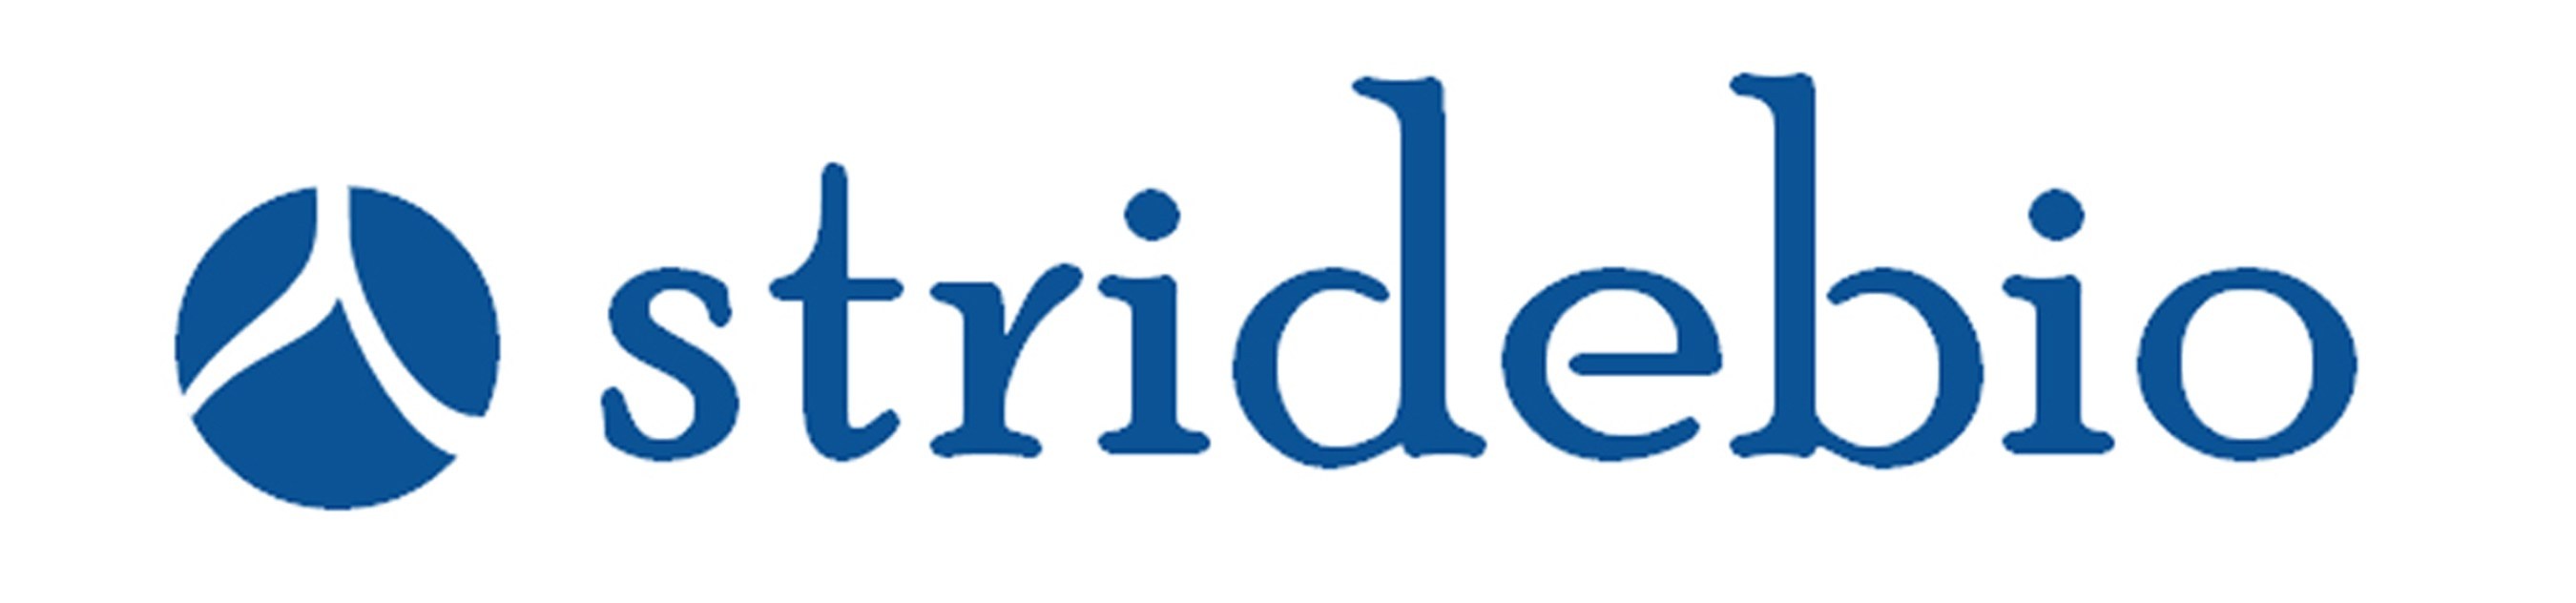 StrideBio logo